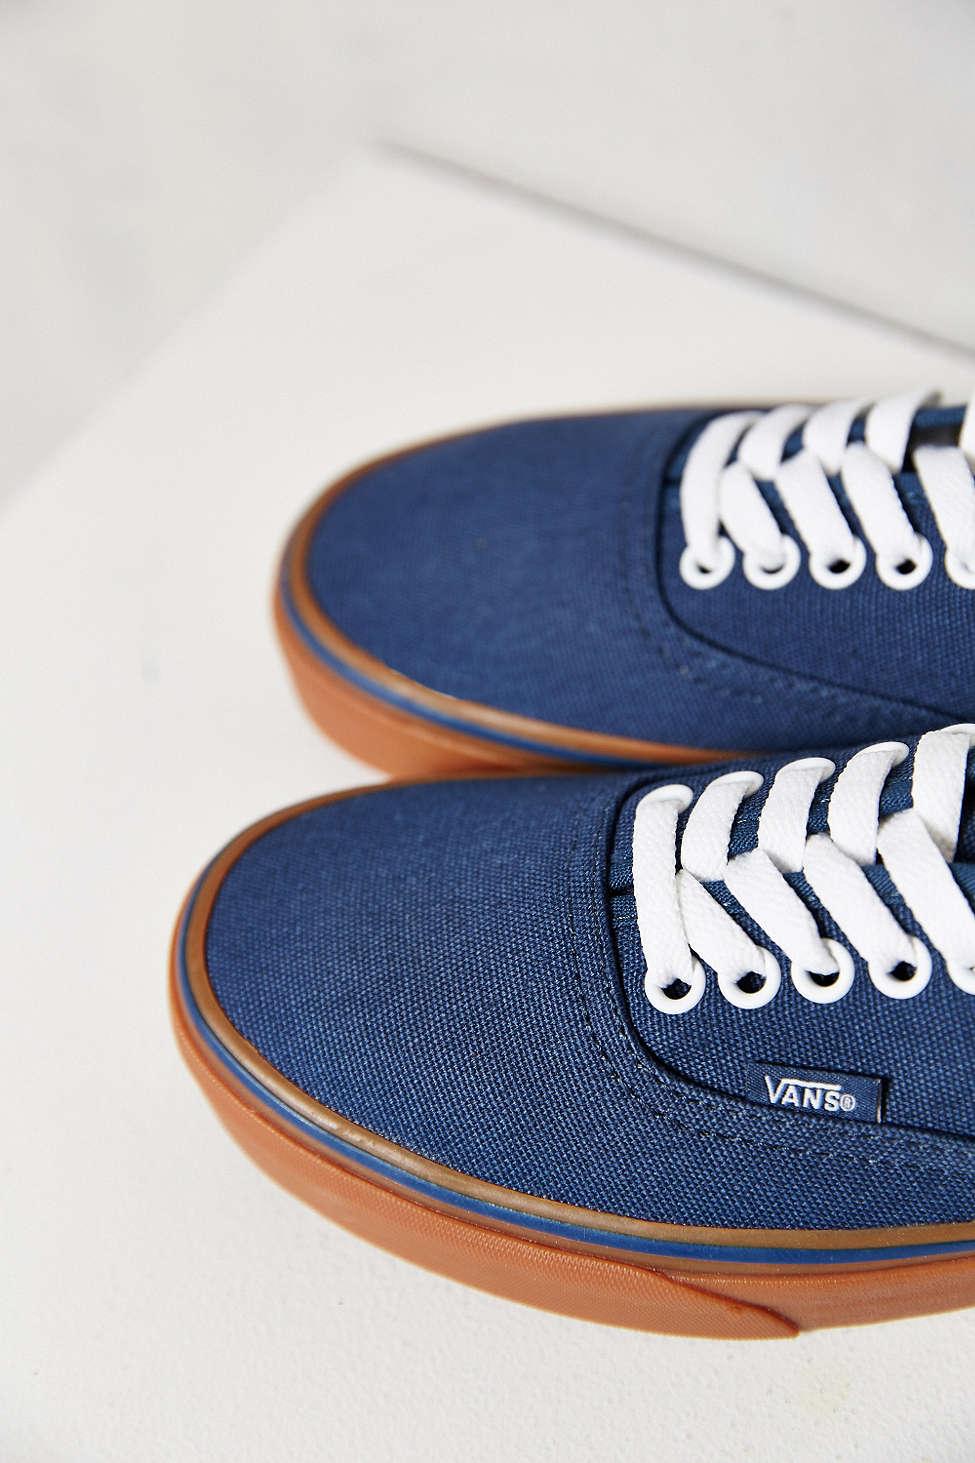 Lyst - Vans Authentic Gum Sole Sneaker in Blue for Men